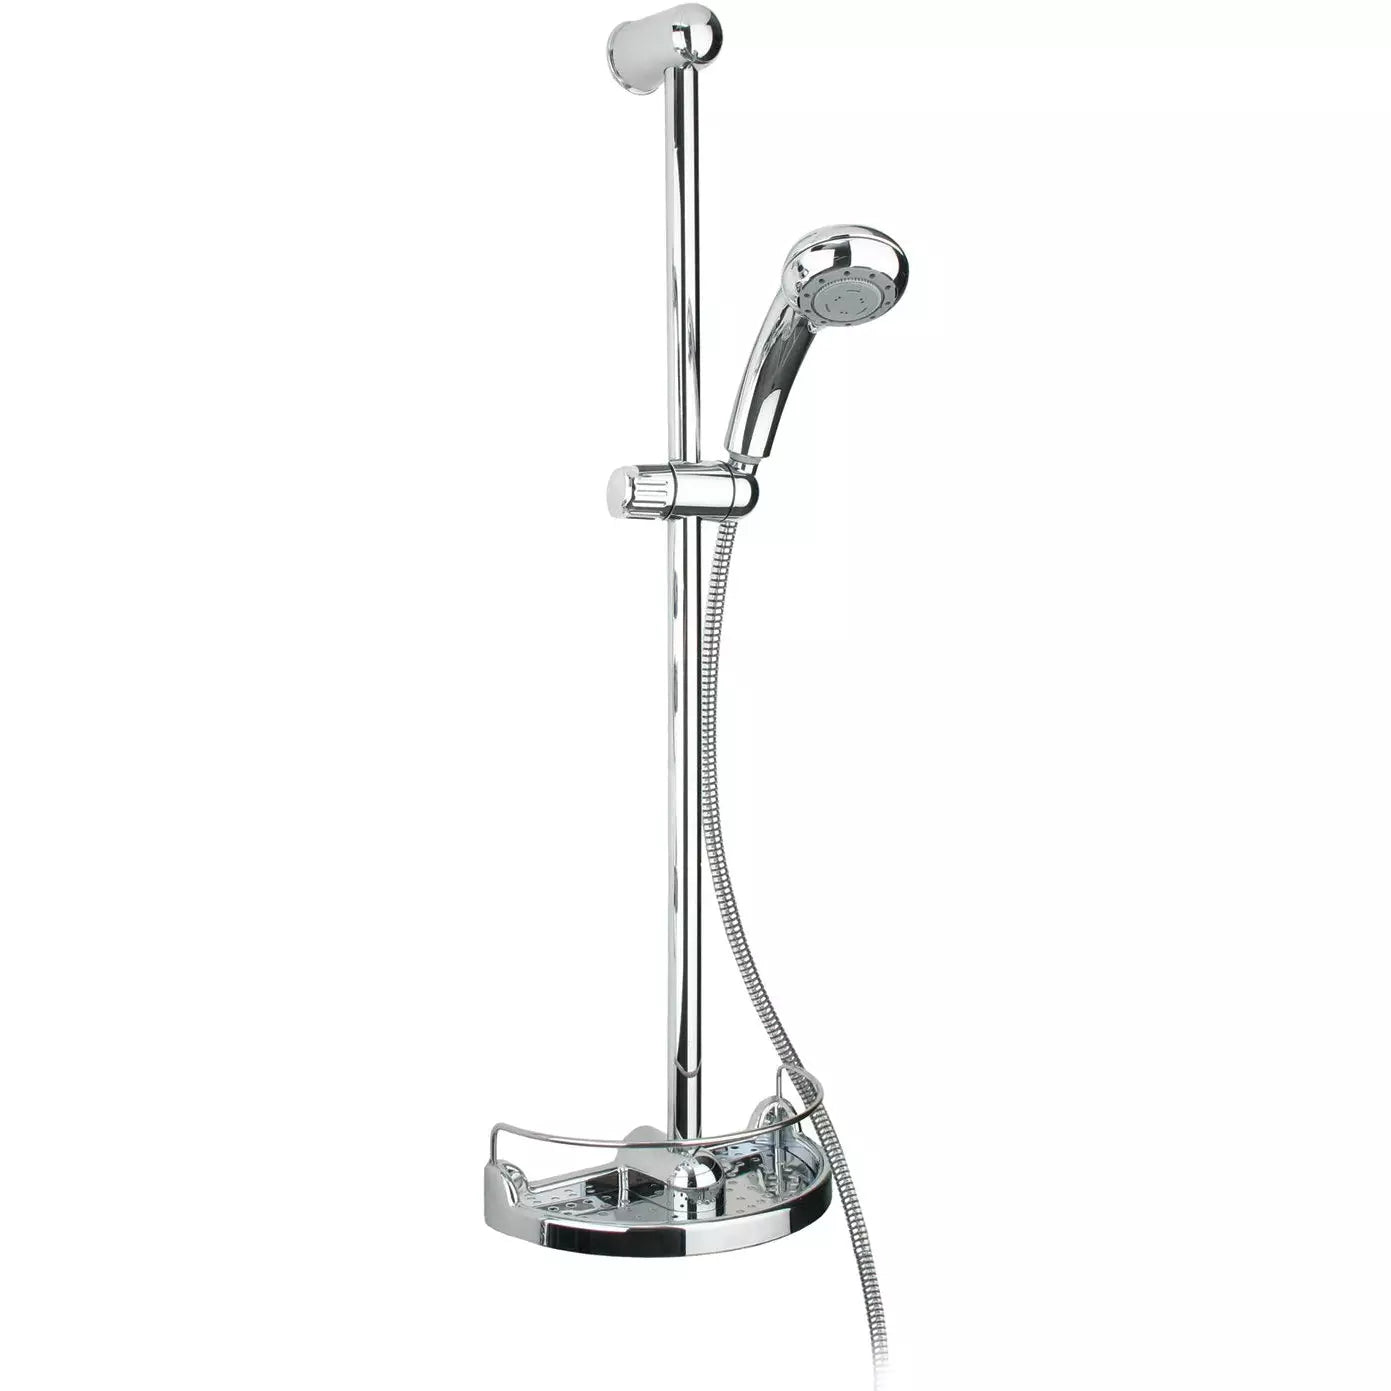 WHITEHAUS Metrohaus Shower Set Includes Slidebar, Hand Held Shower, Hose and Accessories Basket - WH50124-C